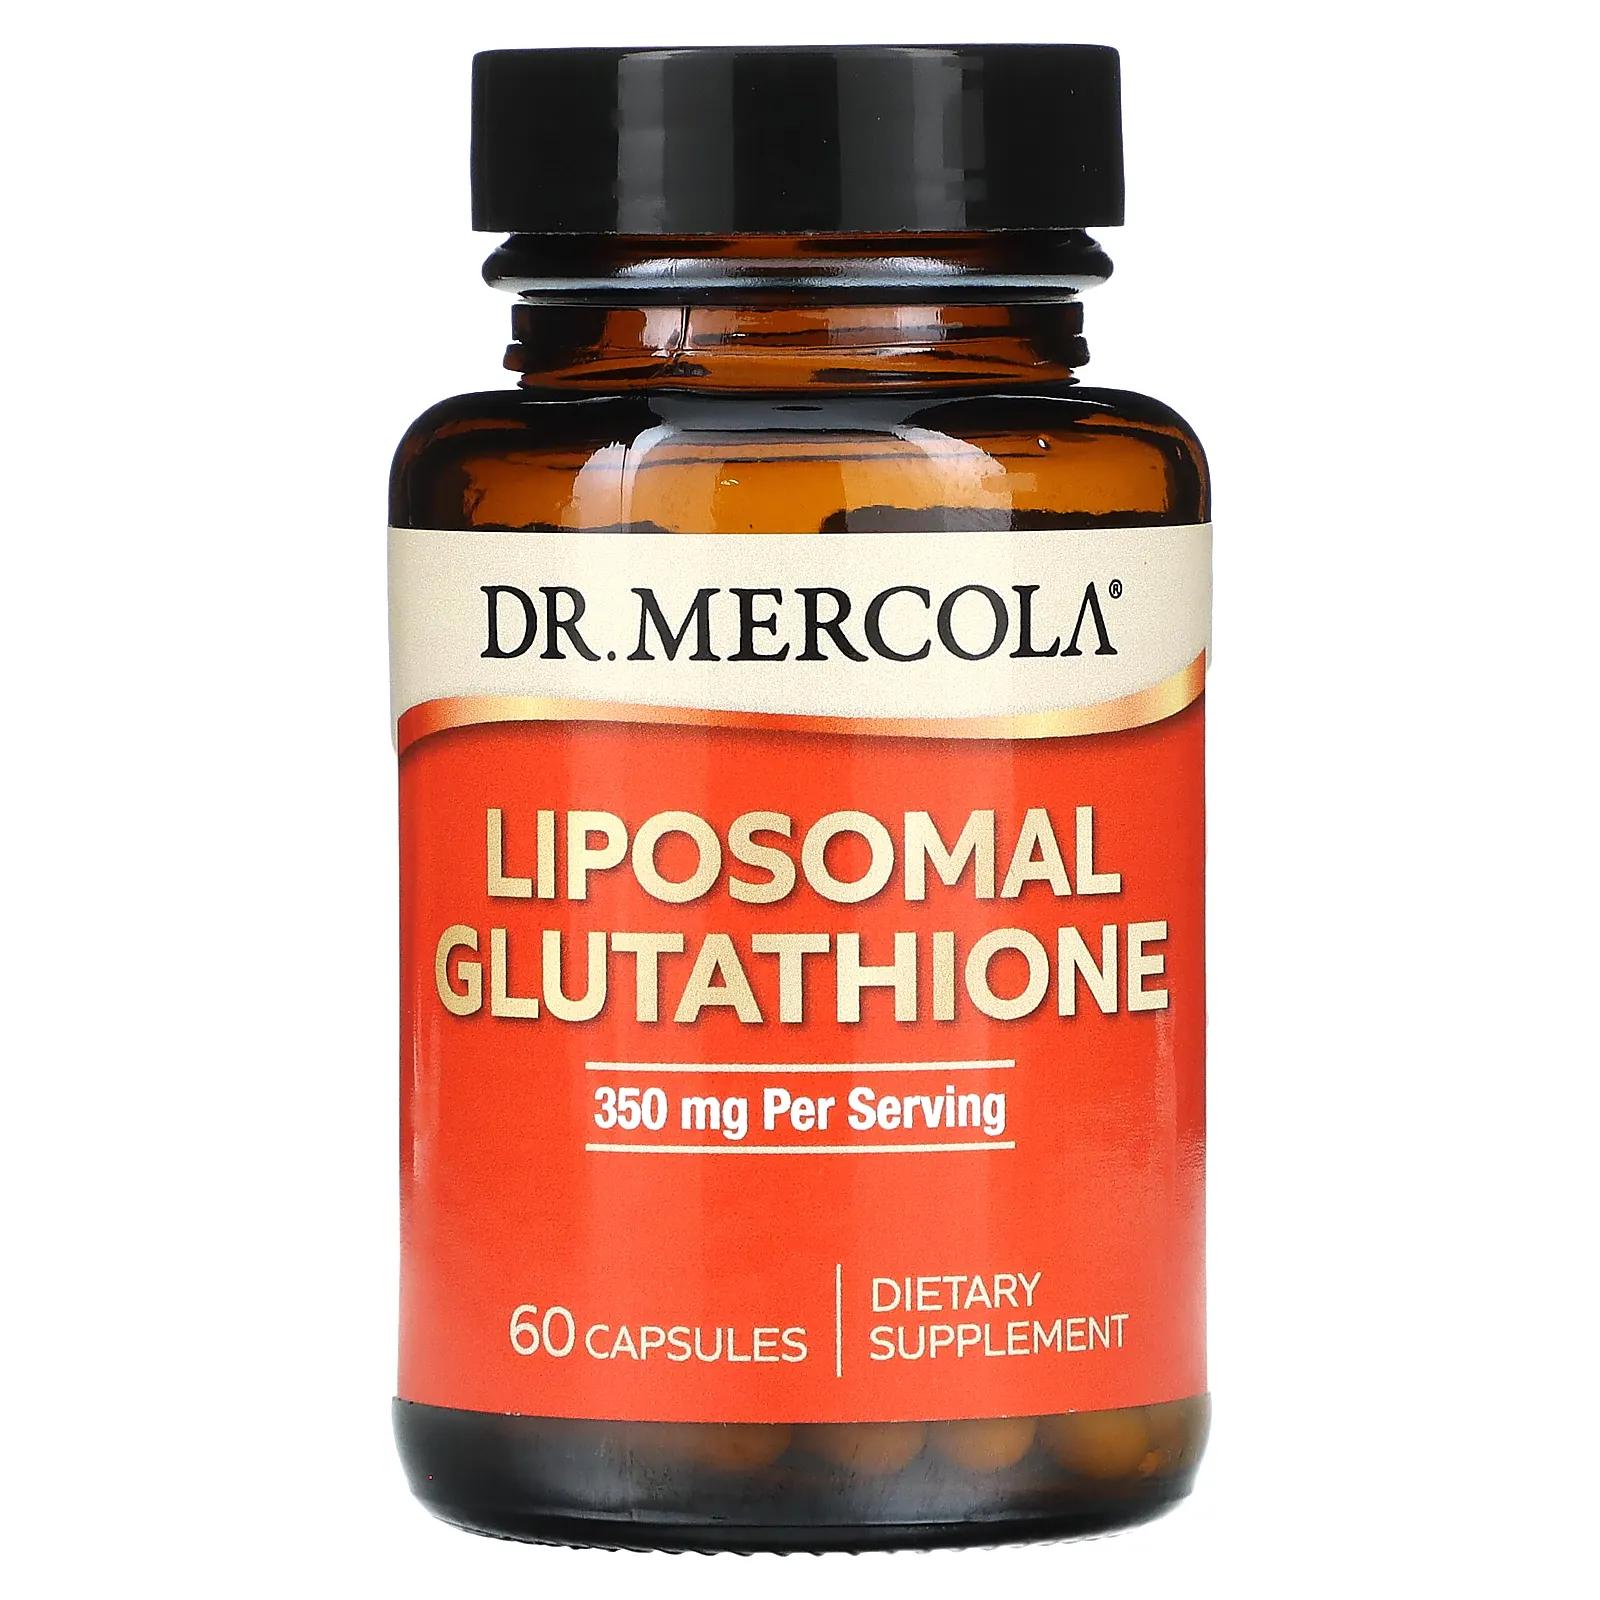 Dr. Mercola Липосомальный глутатион 175 мг 60 капсул липосомальный глутатион 350 мг dr mercola 60 капсул